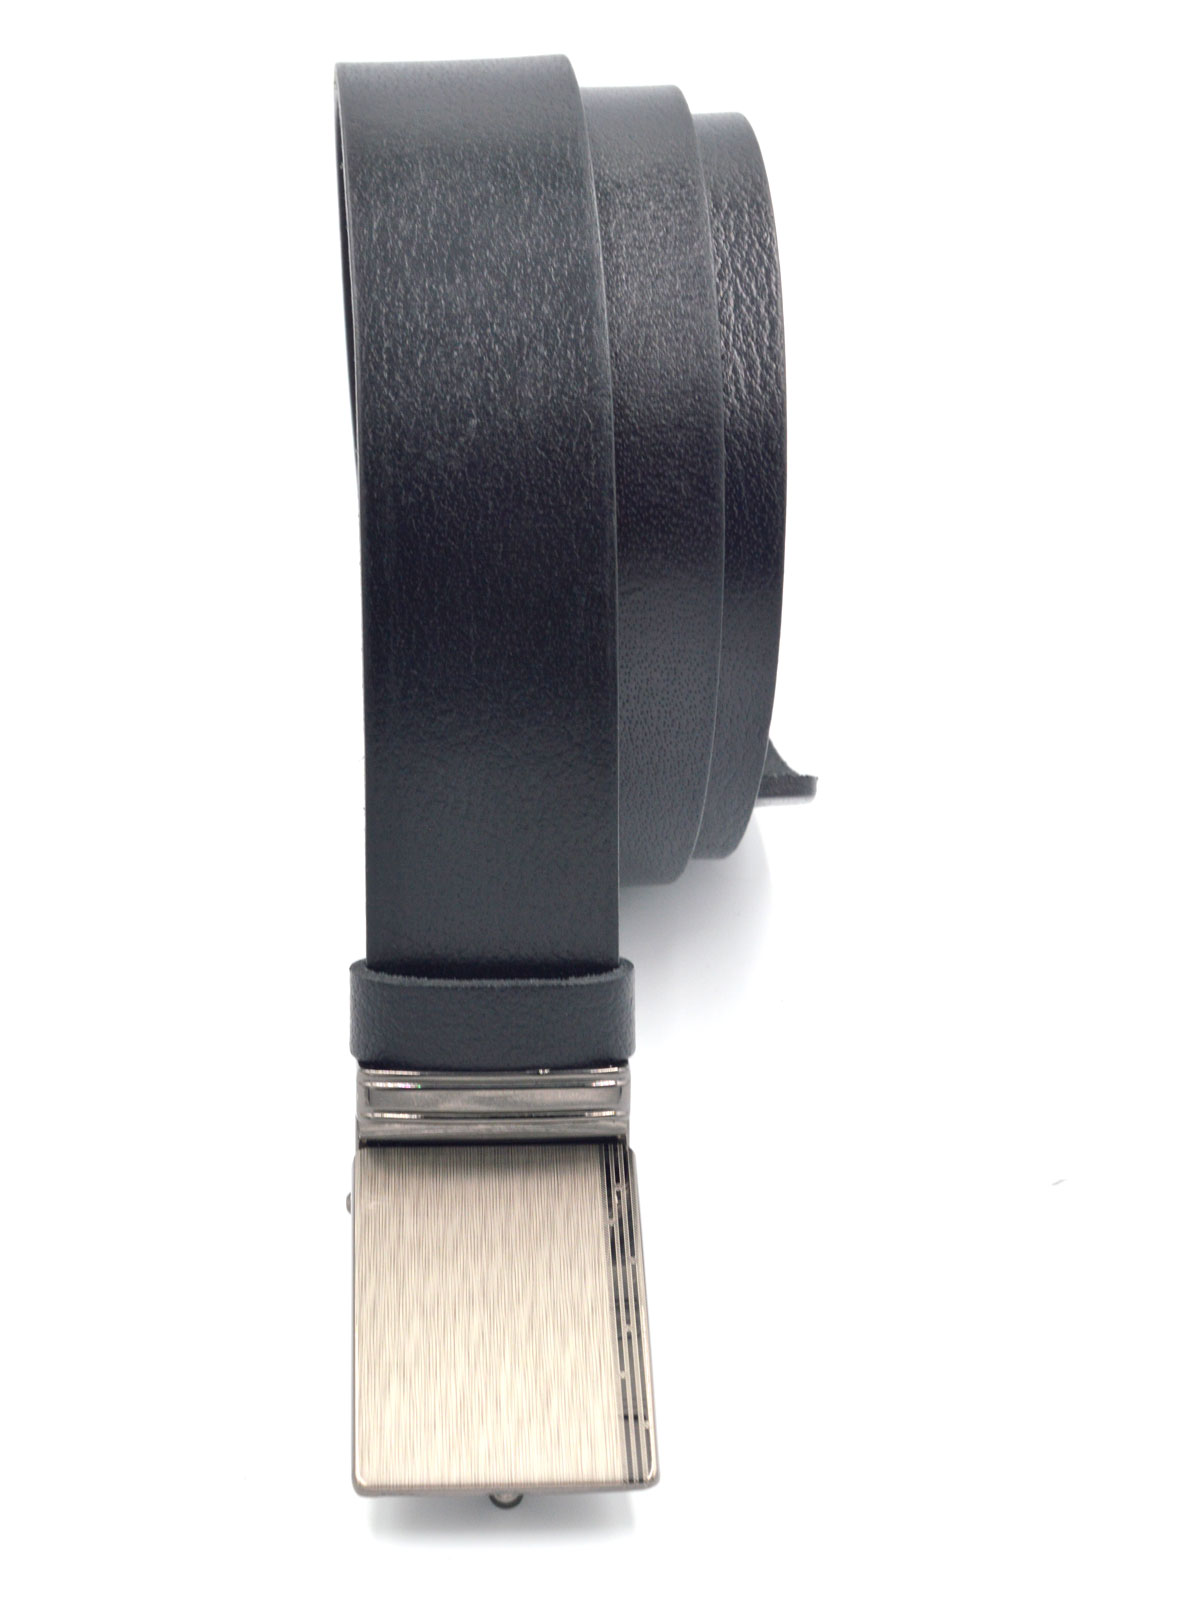 Belt with black metal plate - 10433 - € 24.75 img2